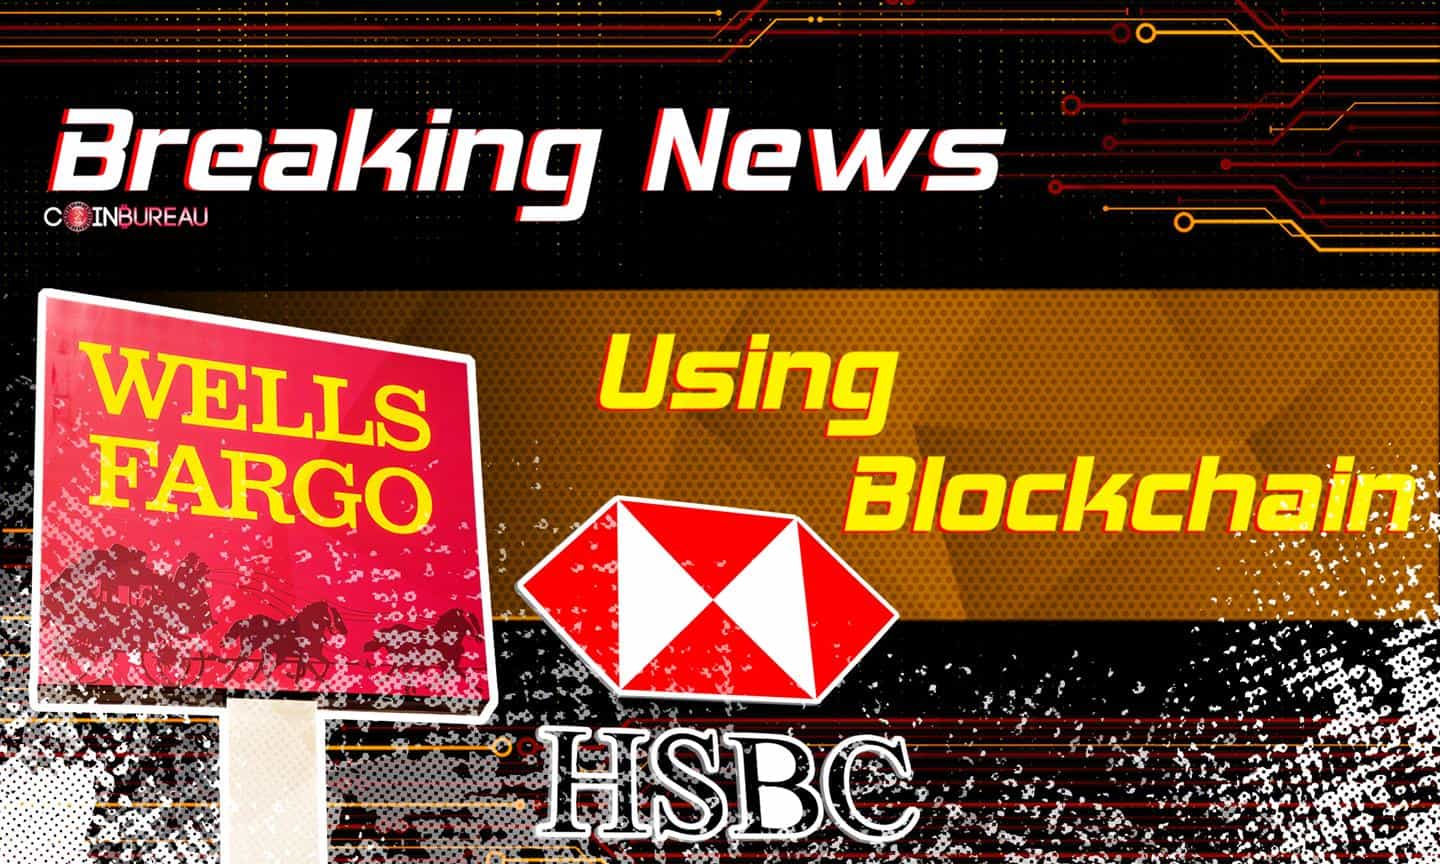 Wells Fargo, HSBC to Settle Forex Transactions Using Blockchain